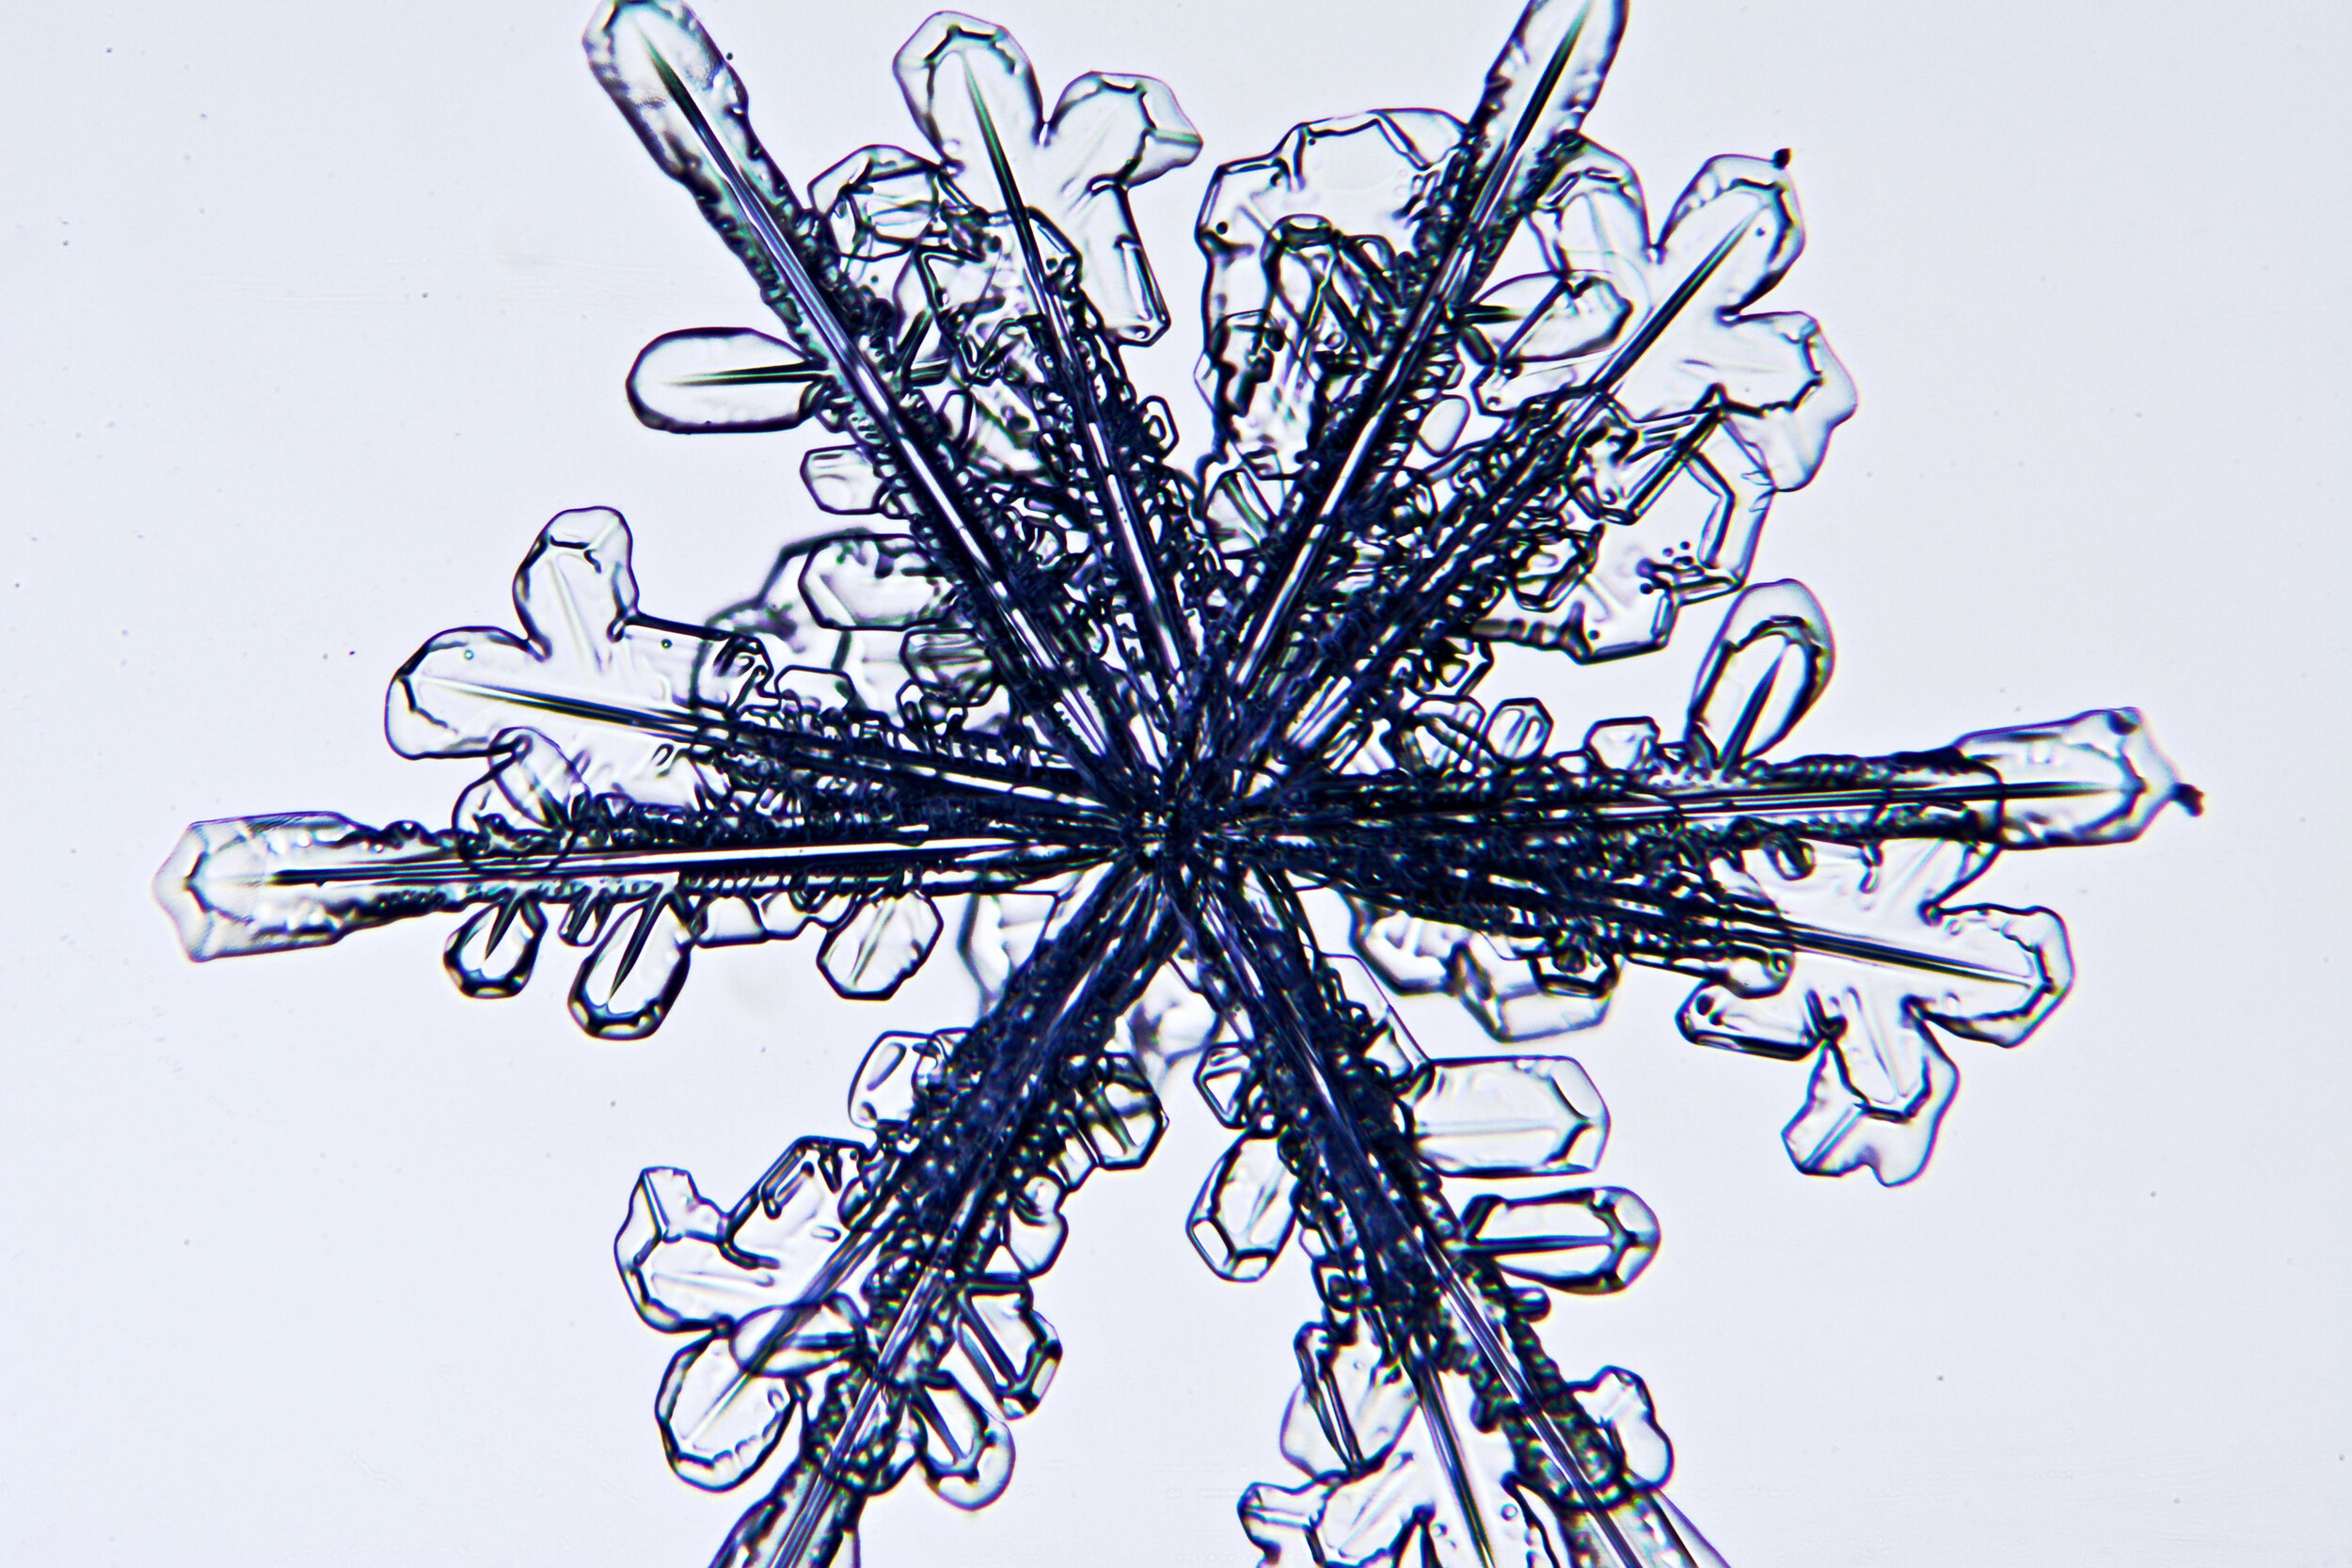 Gary-Mawe-12-Sided-Snowflake-10.jpg